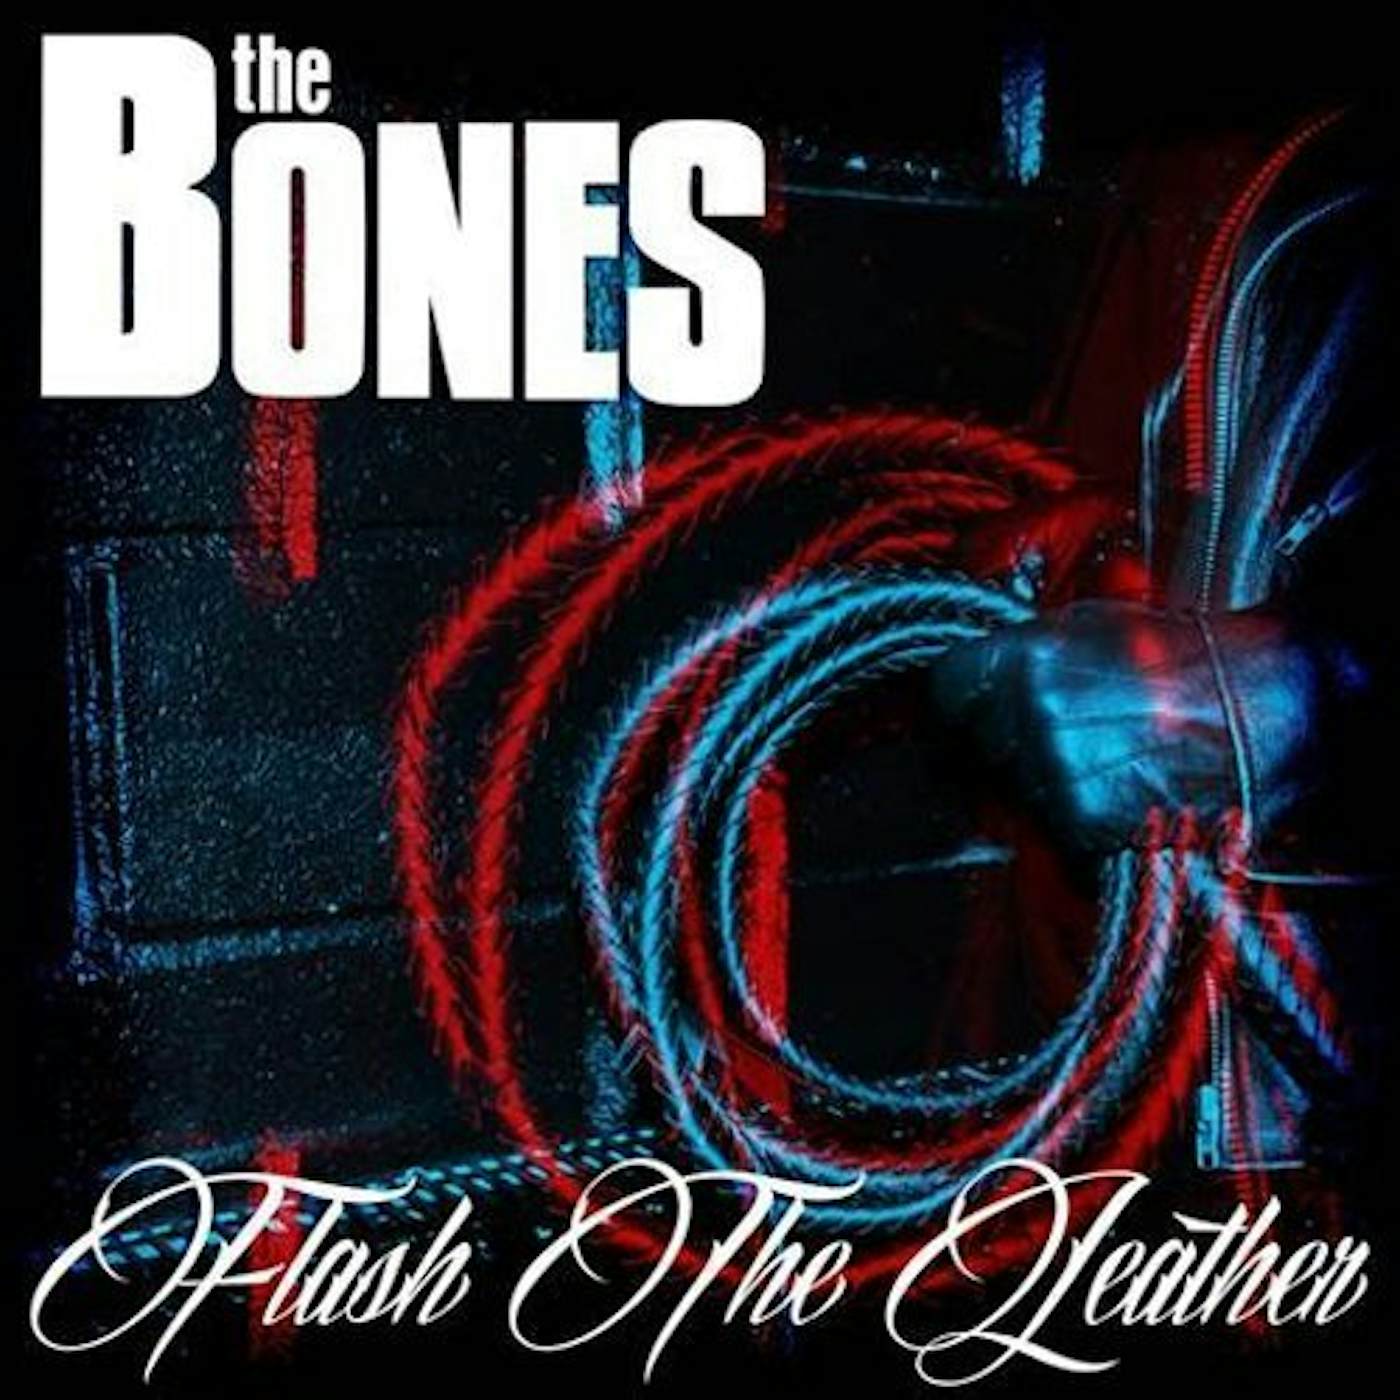 The Bones Flash The Leather Vinyl Record